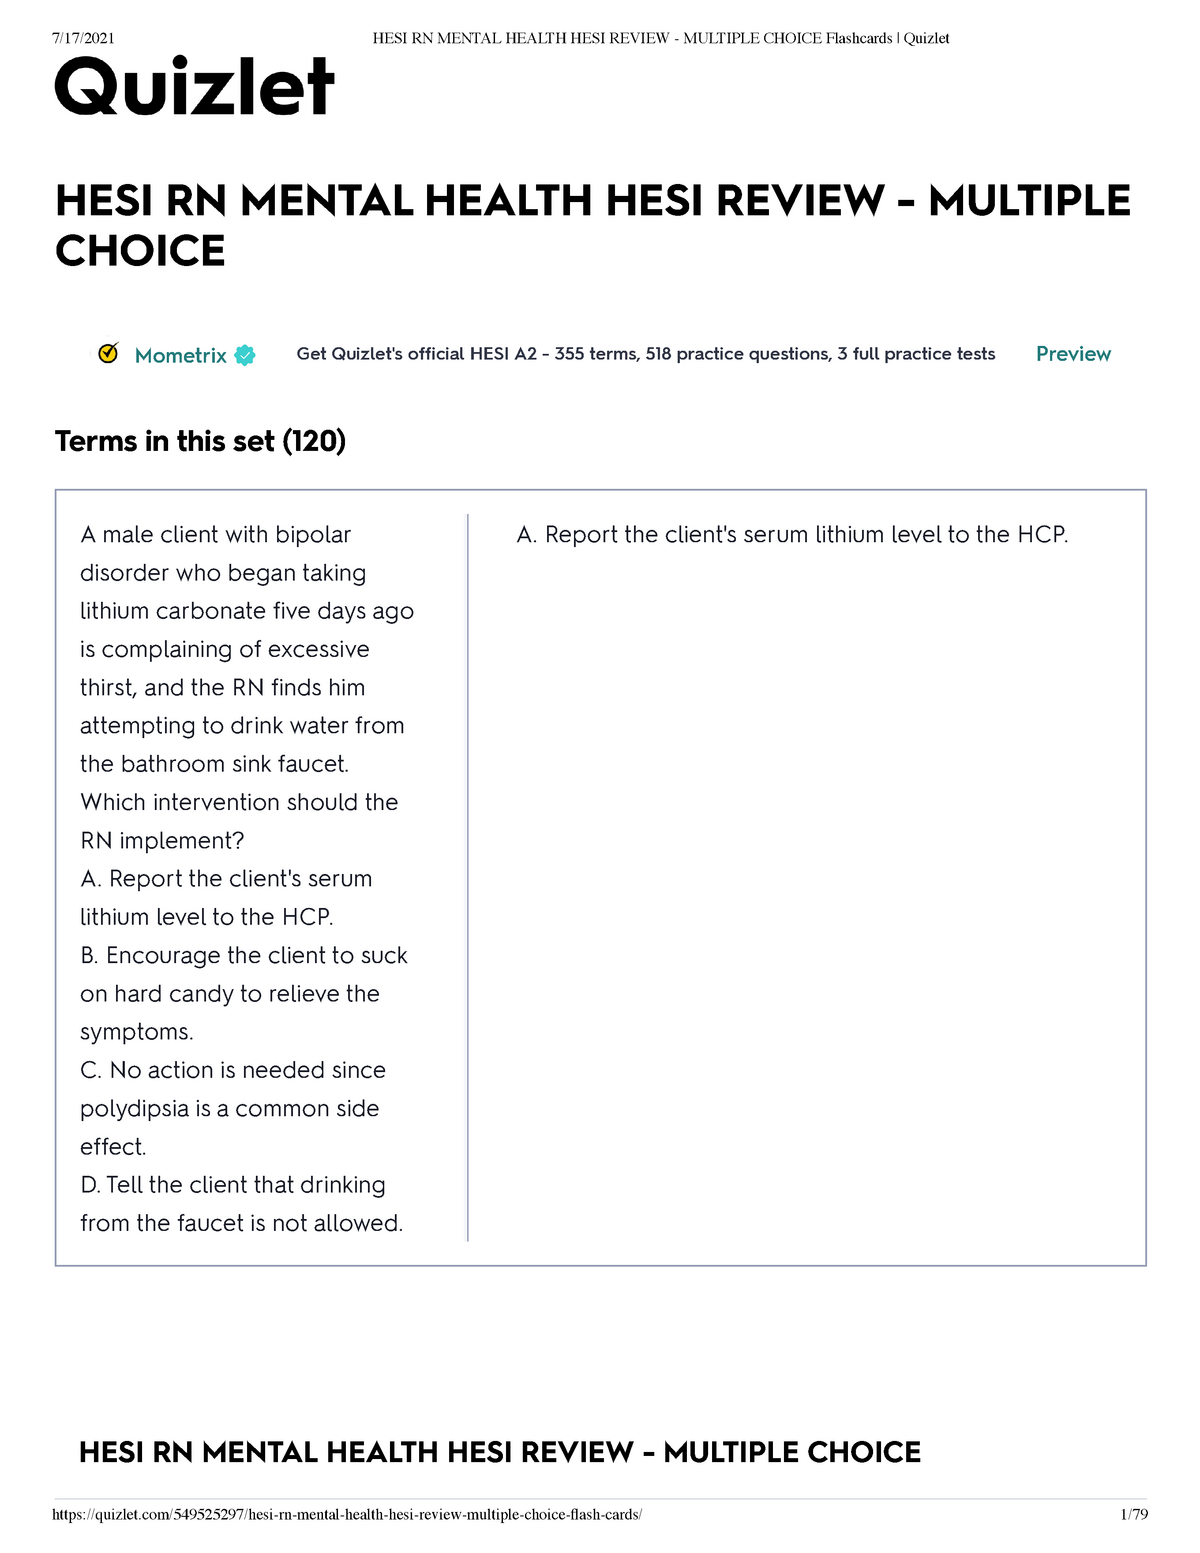 psychosis hesi case study quizlet